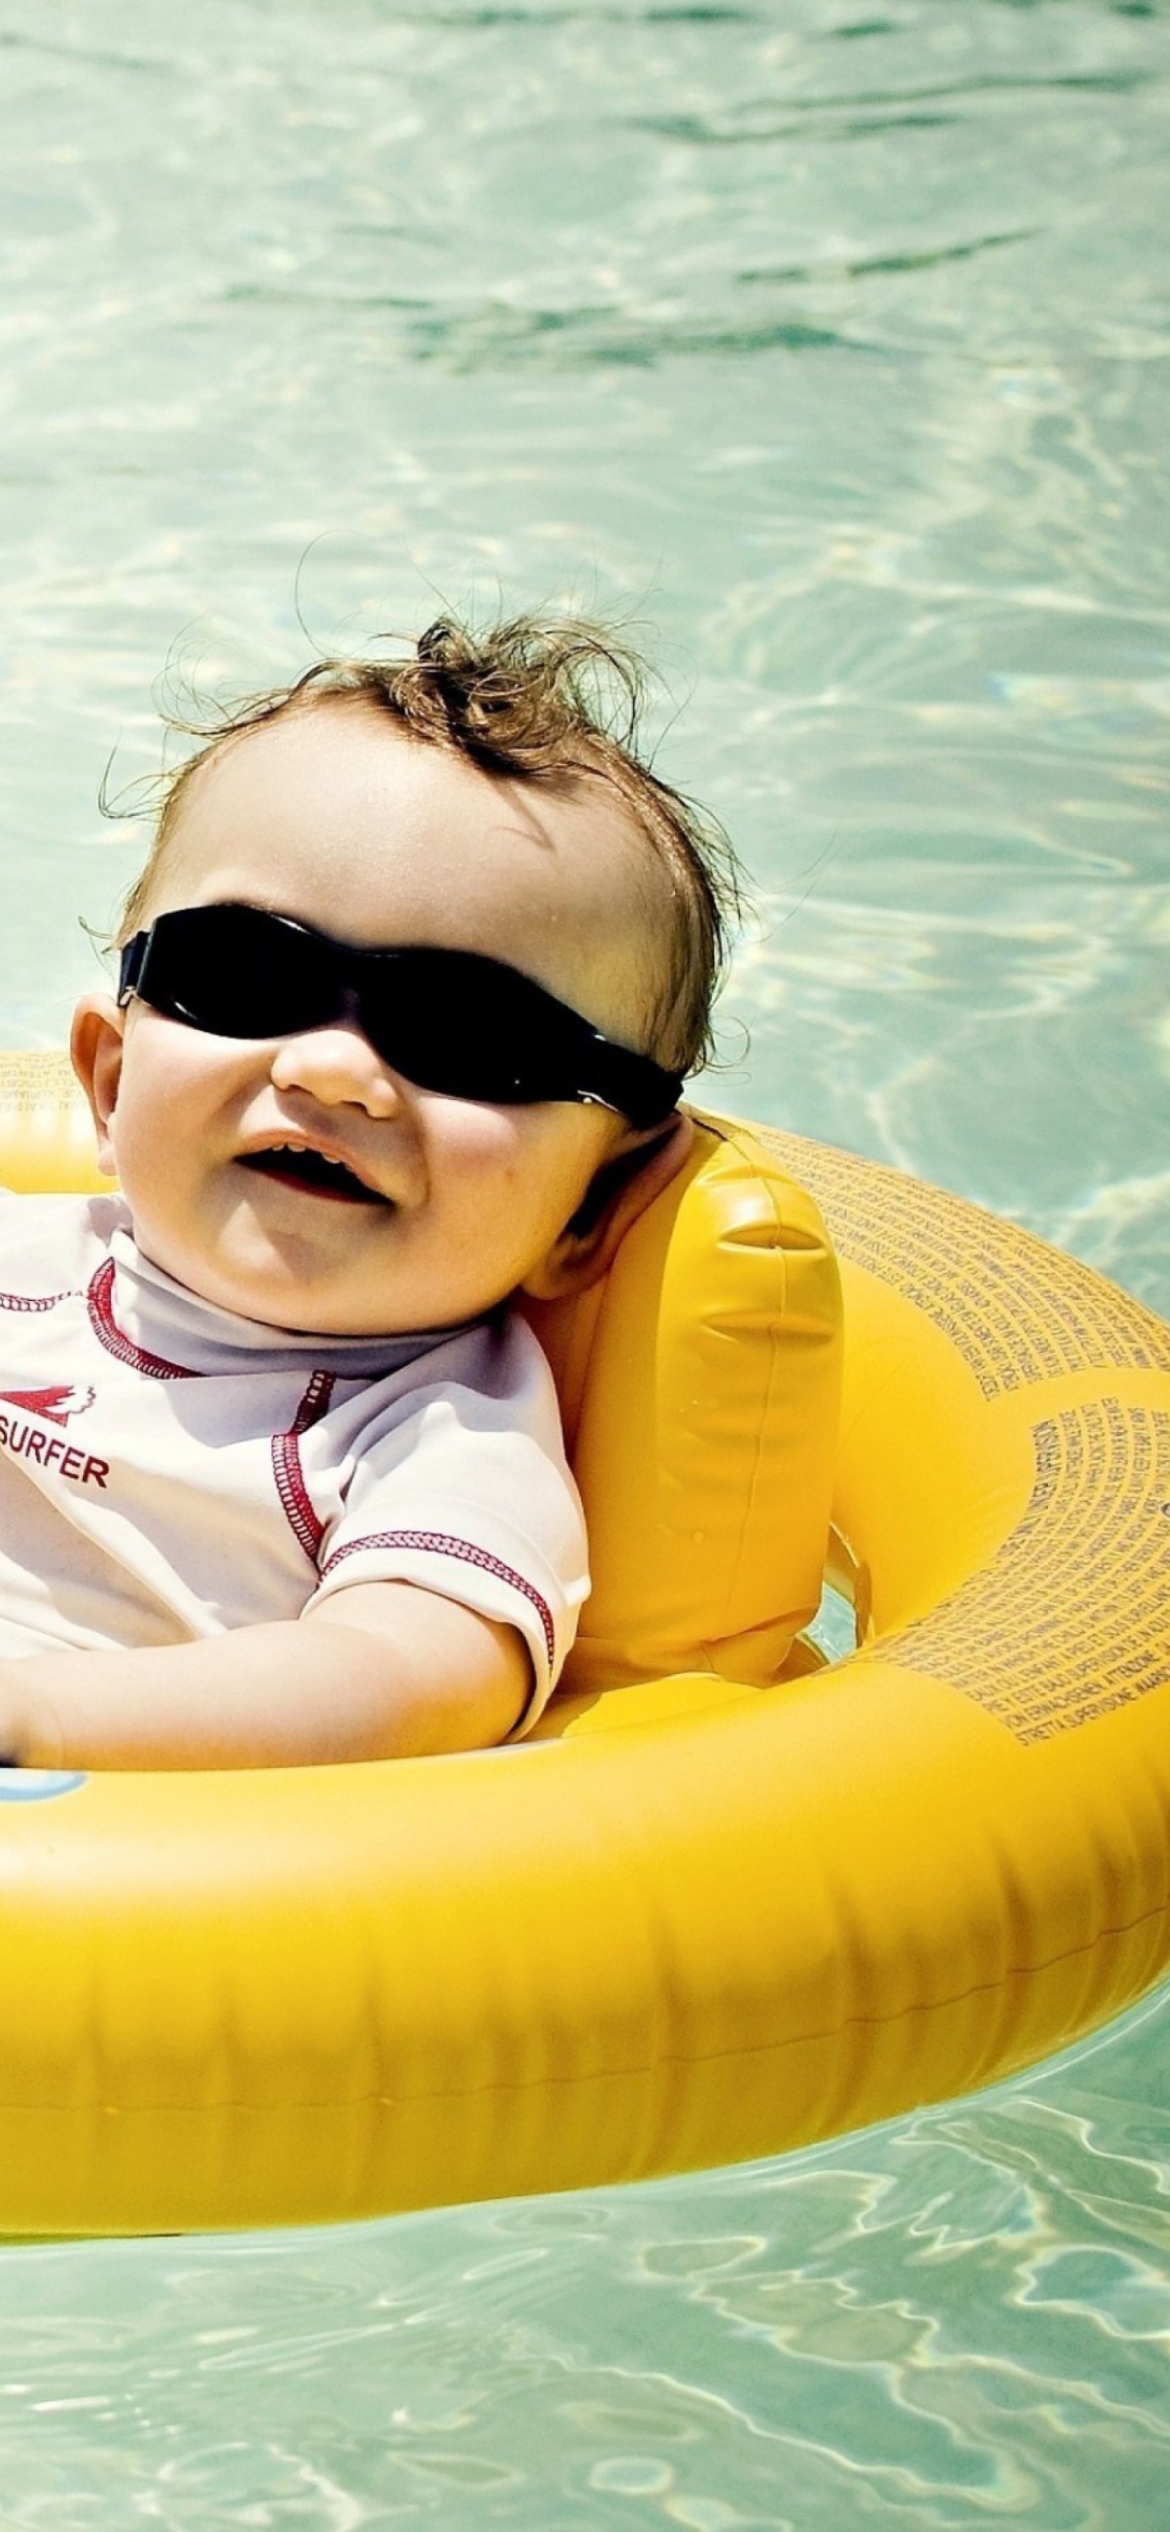 Cute Baby Boy Having Fun In Pool wallpaper 1170x2532